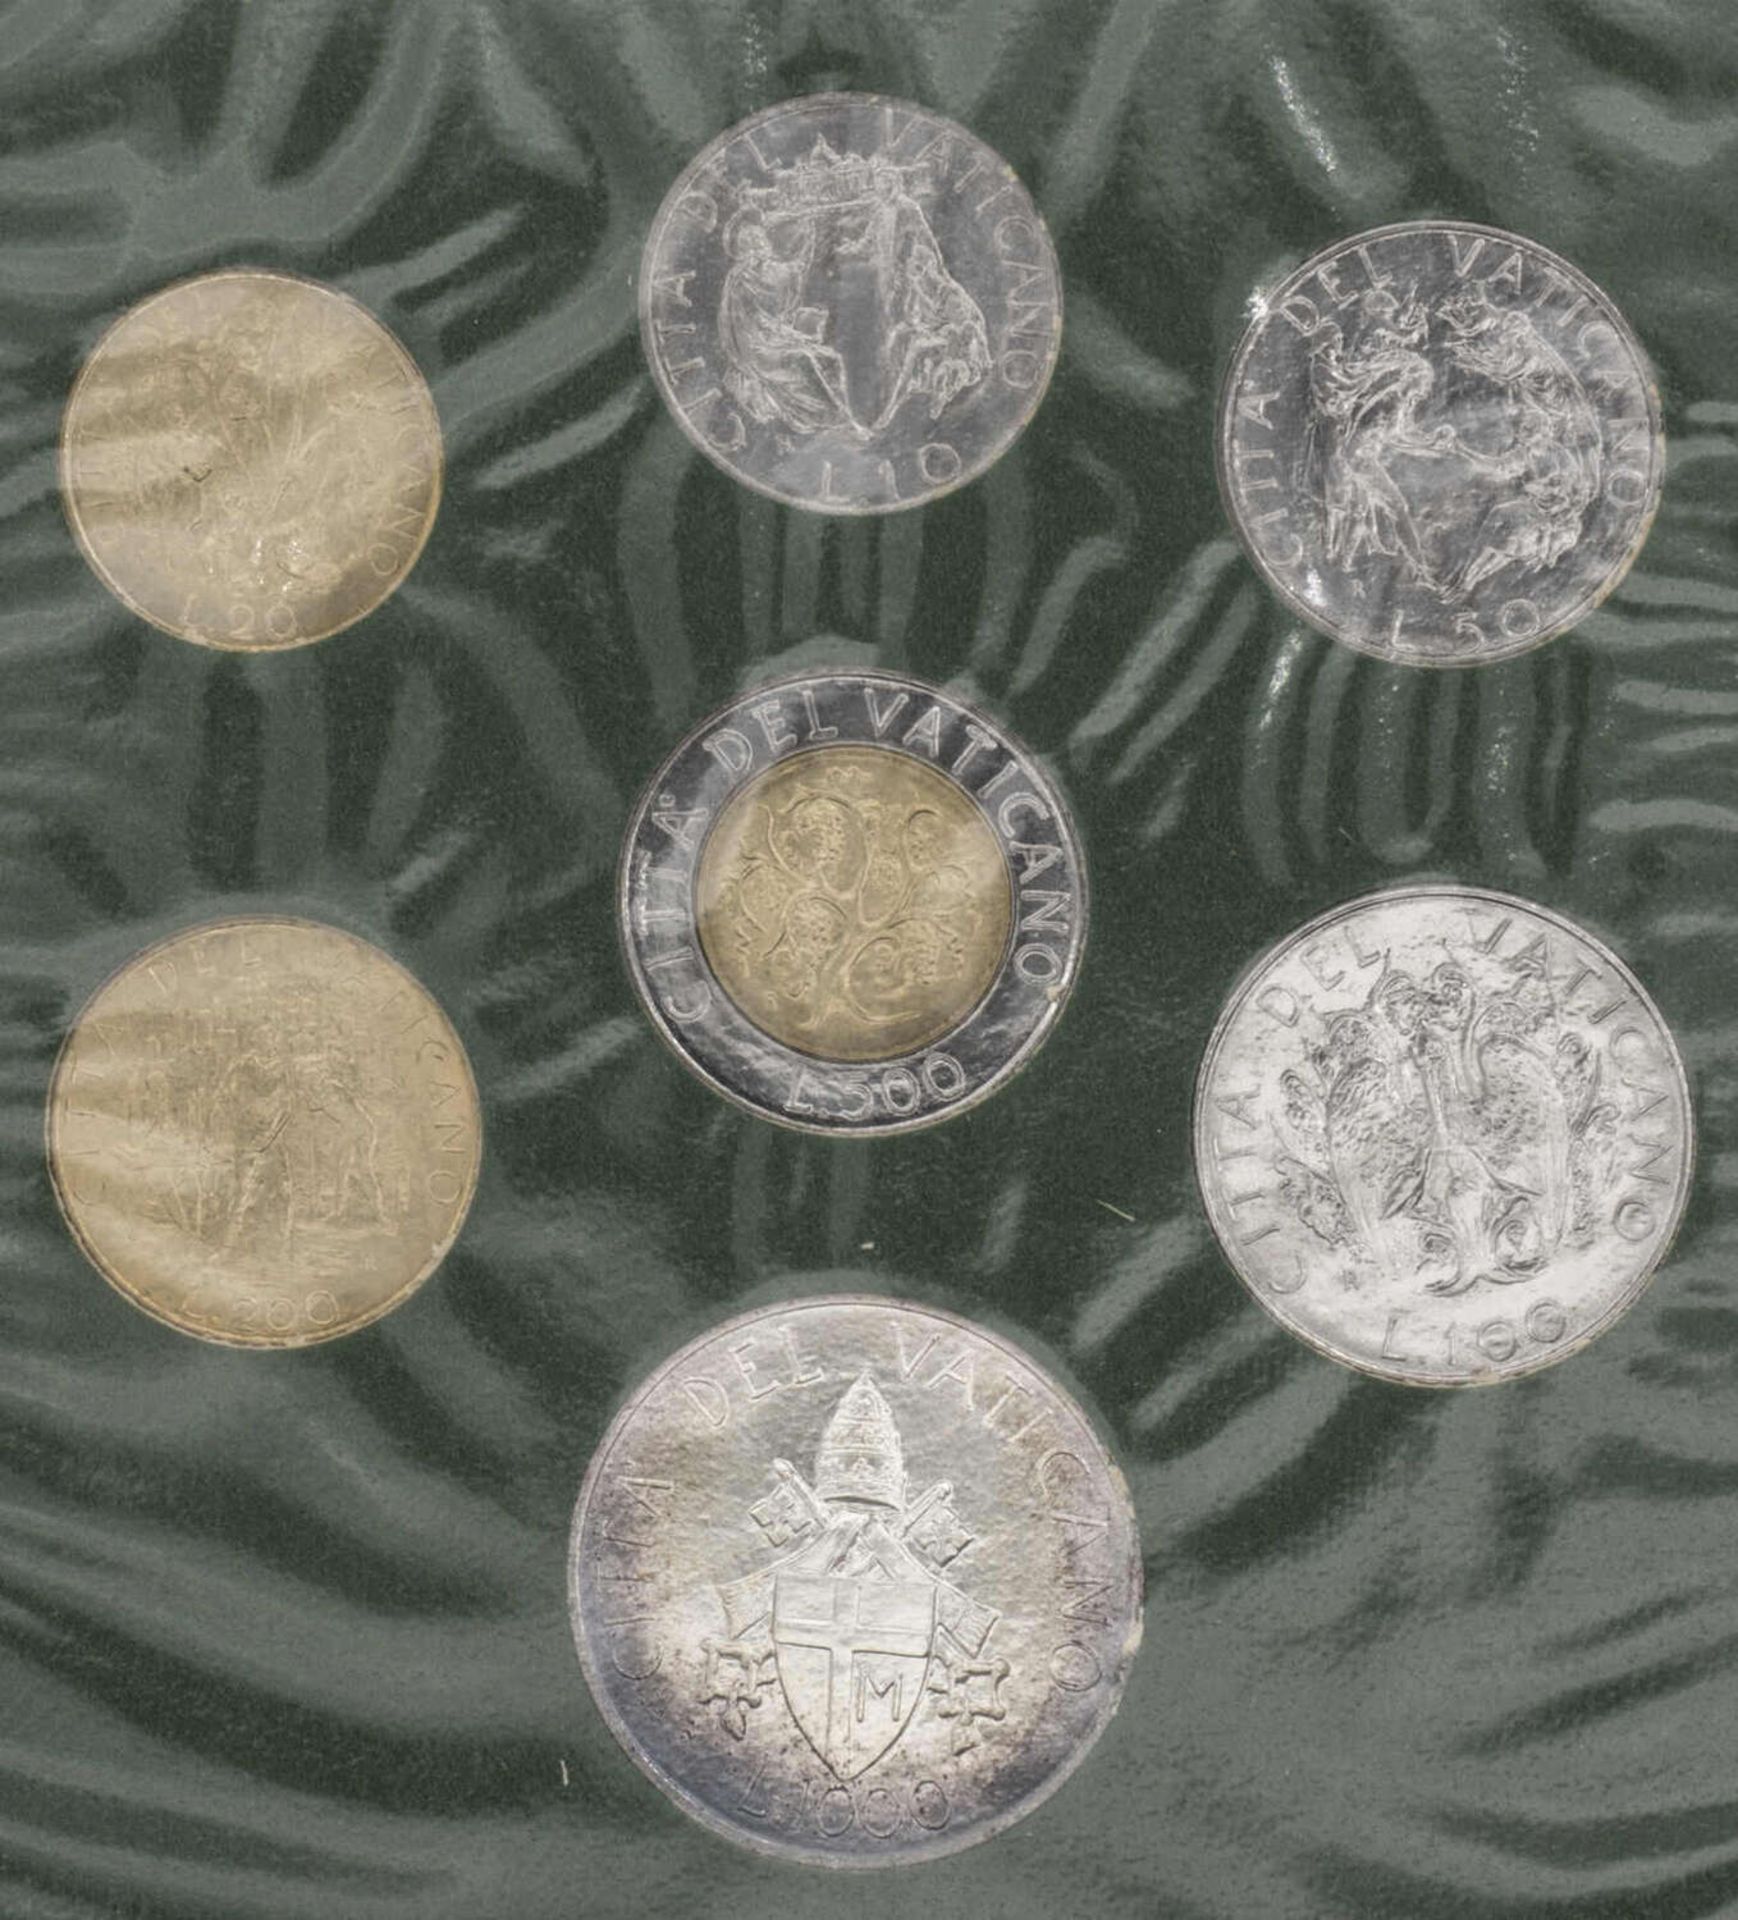 Vatikan 1989, Kursmünzensatz "Johannes Paul II.". Stgl. Vatican 1989, coin set "John Paul II". BU. - Bild 2 aus 2